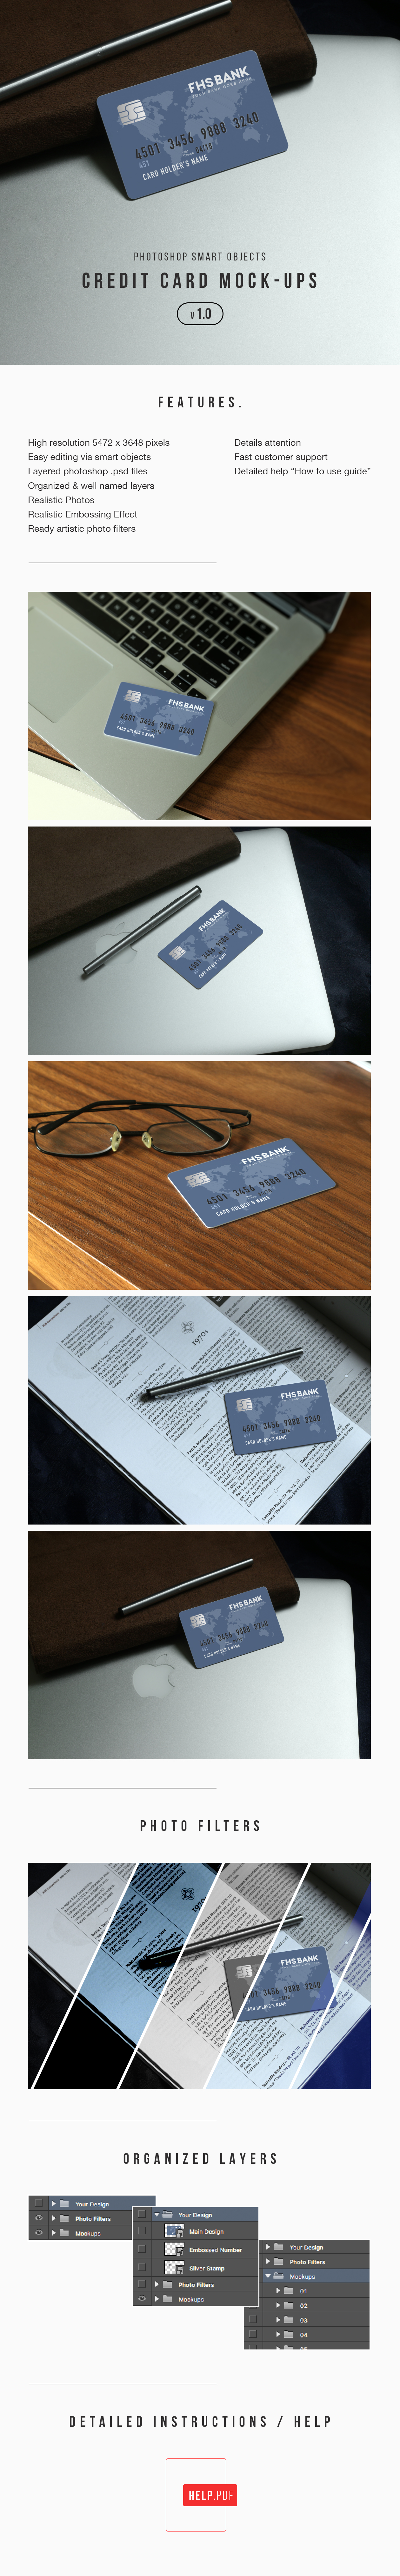 信用卡银行卡外观设计样机 Credit Card Mockups插图